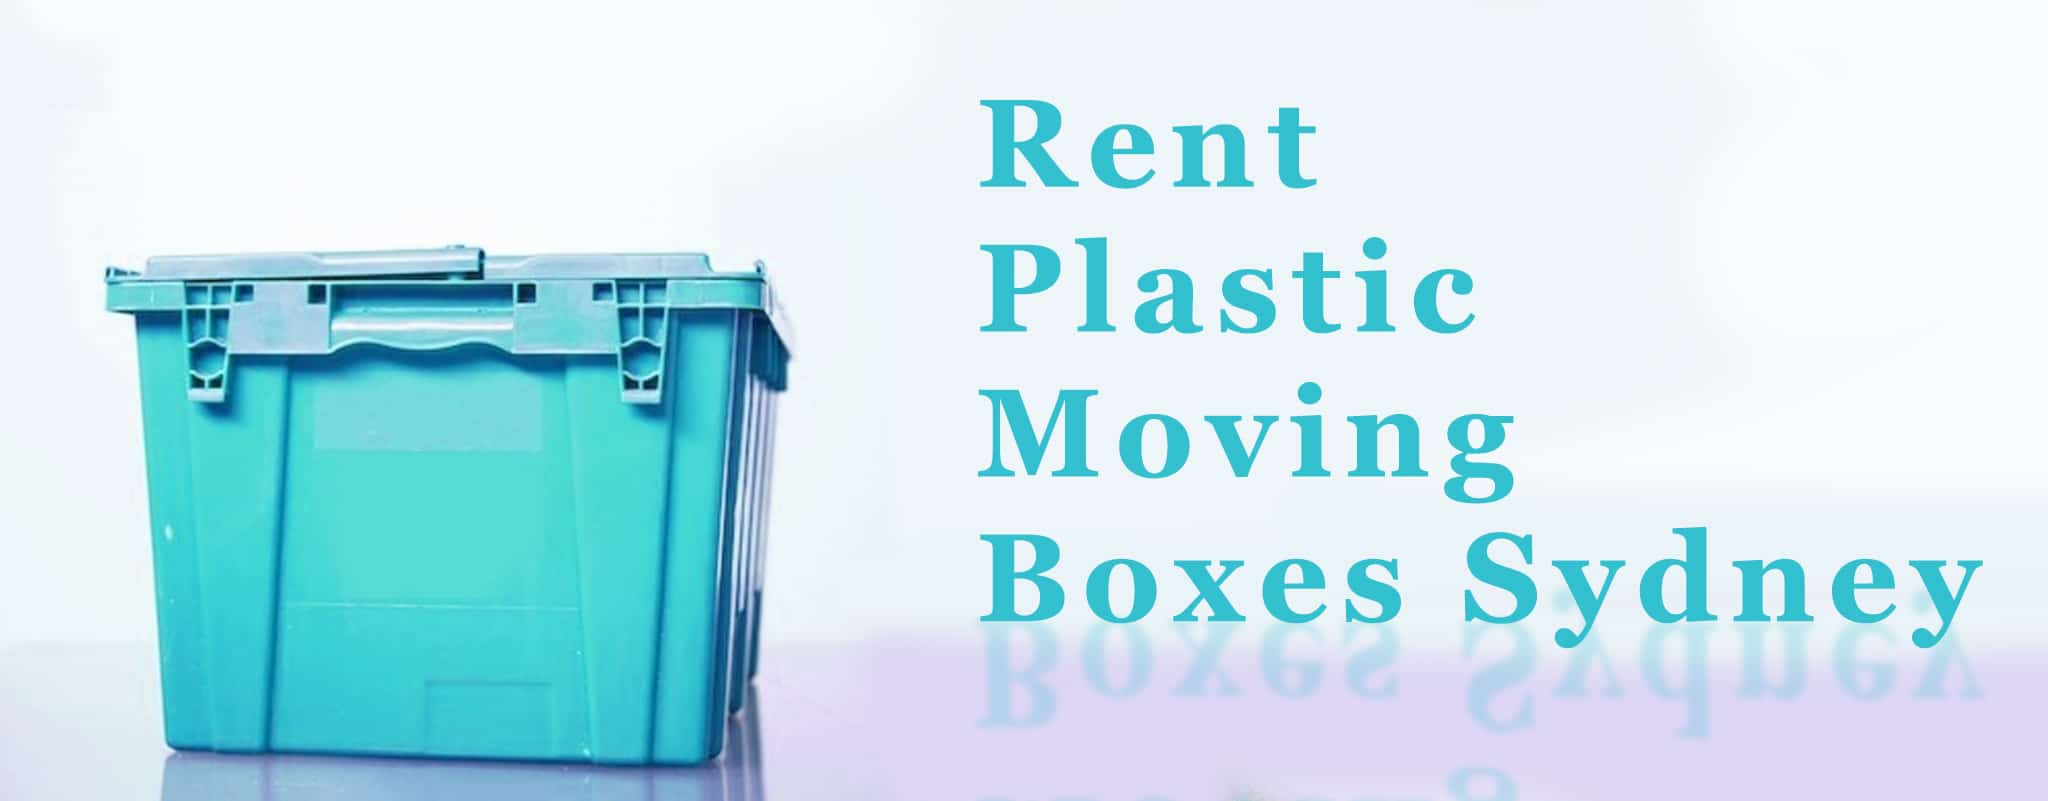 Rent Plastic Moving Boxes Sydneyf-3591e65b